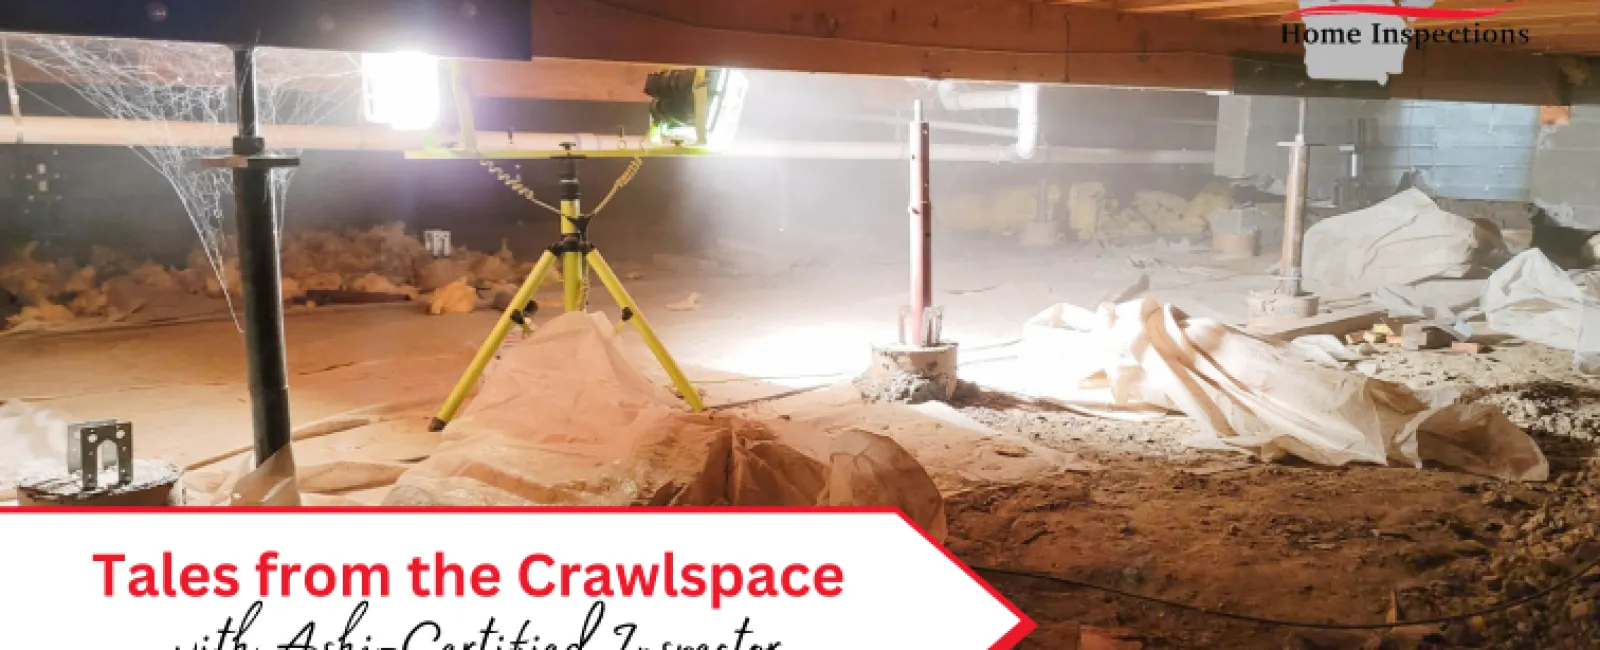 Crawlspace Inspection